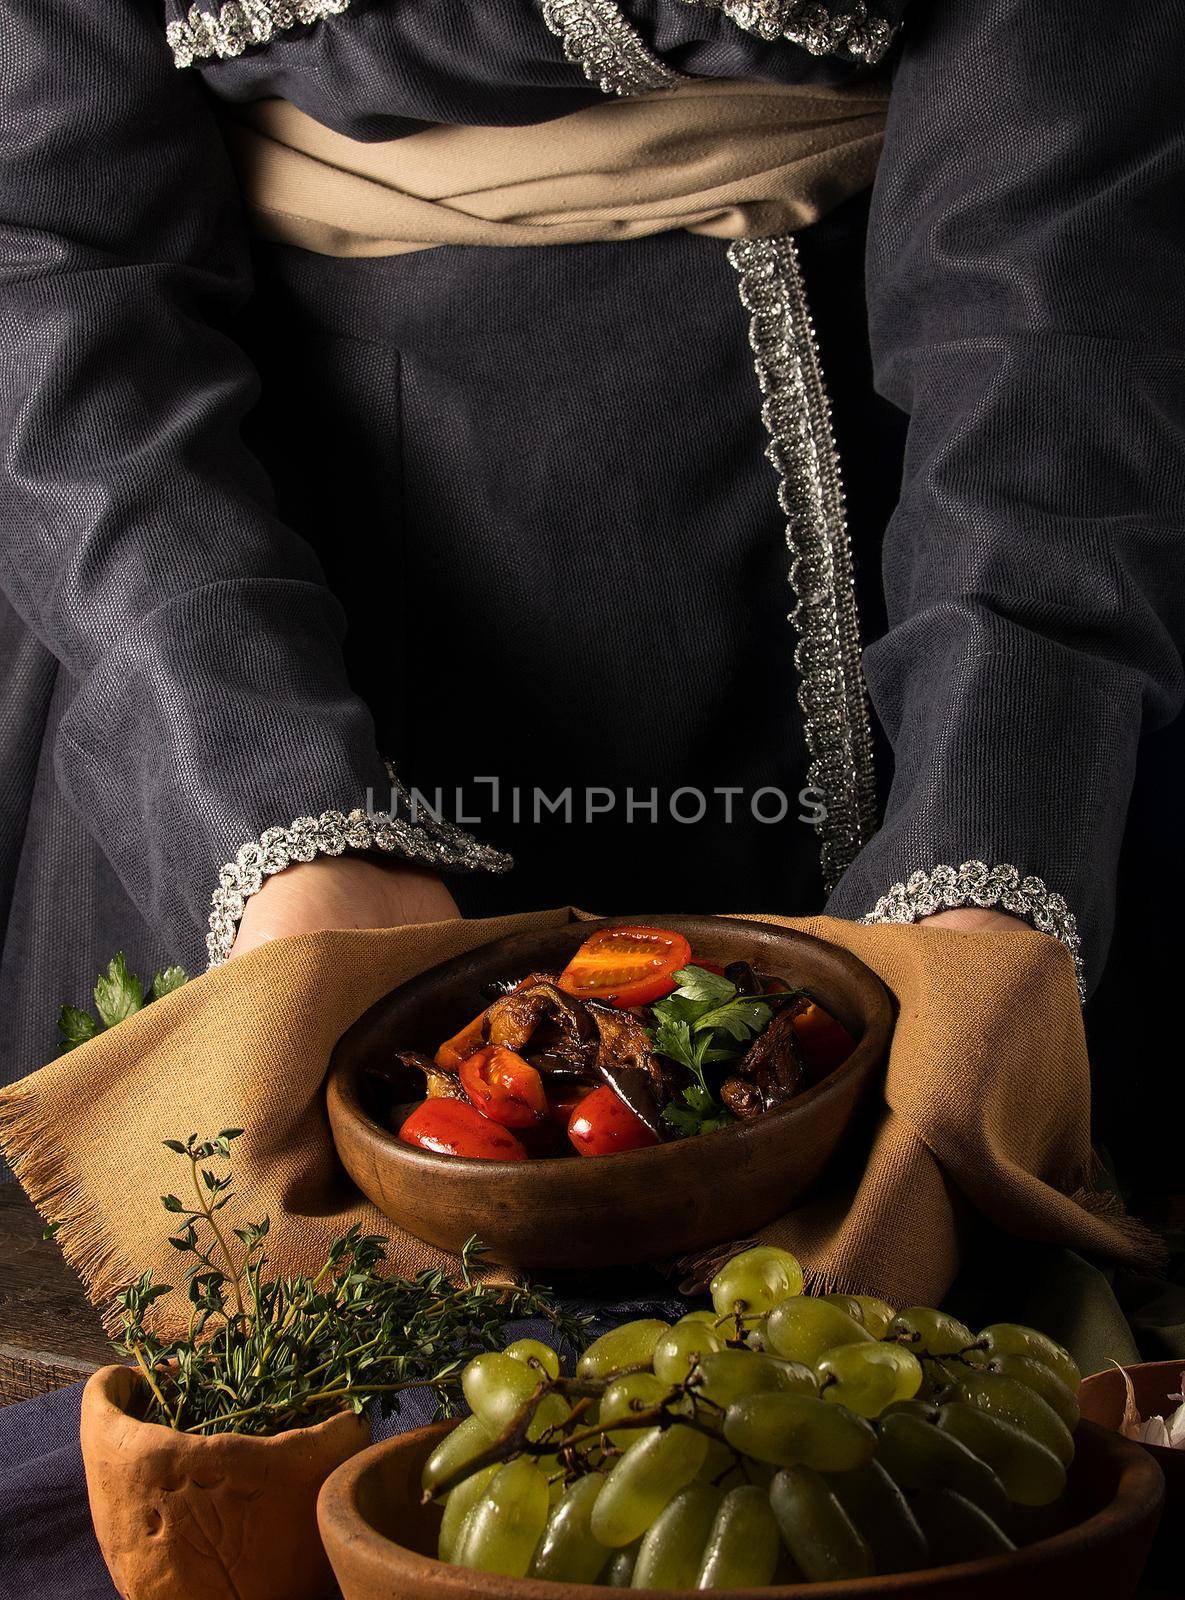 A vertical shot of a chef serving a gourmet salad dish